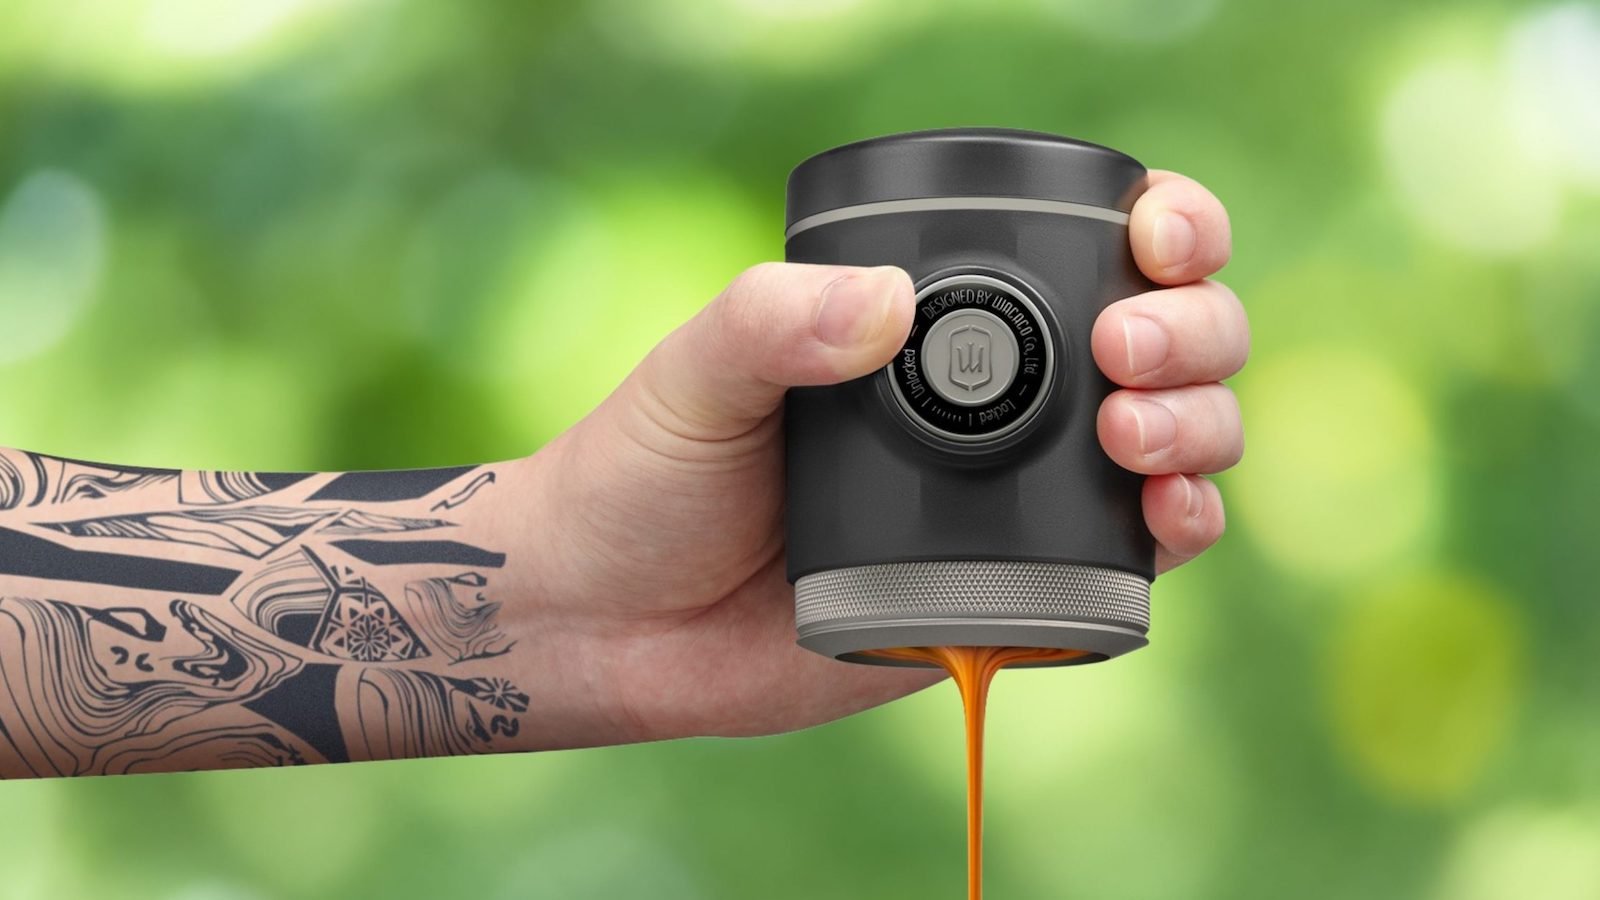 WACACO Picopresso handheld portable espresso maker creates an incredibly fine grind